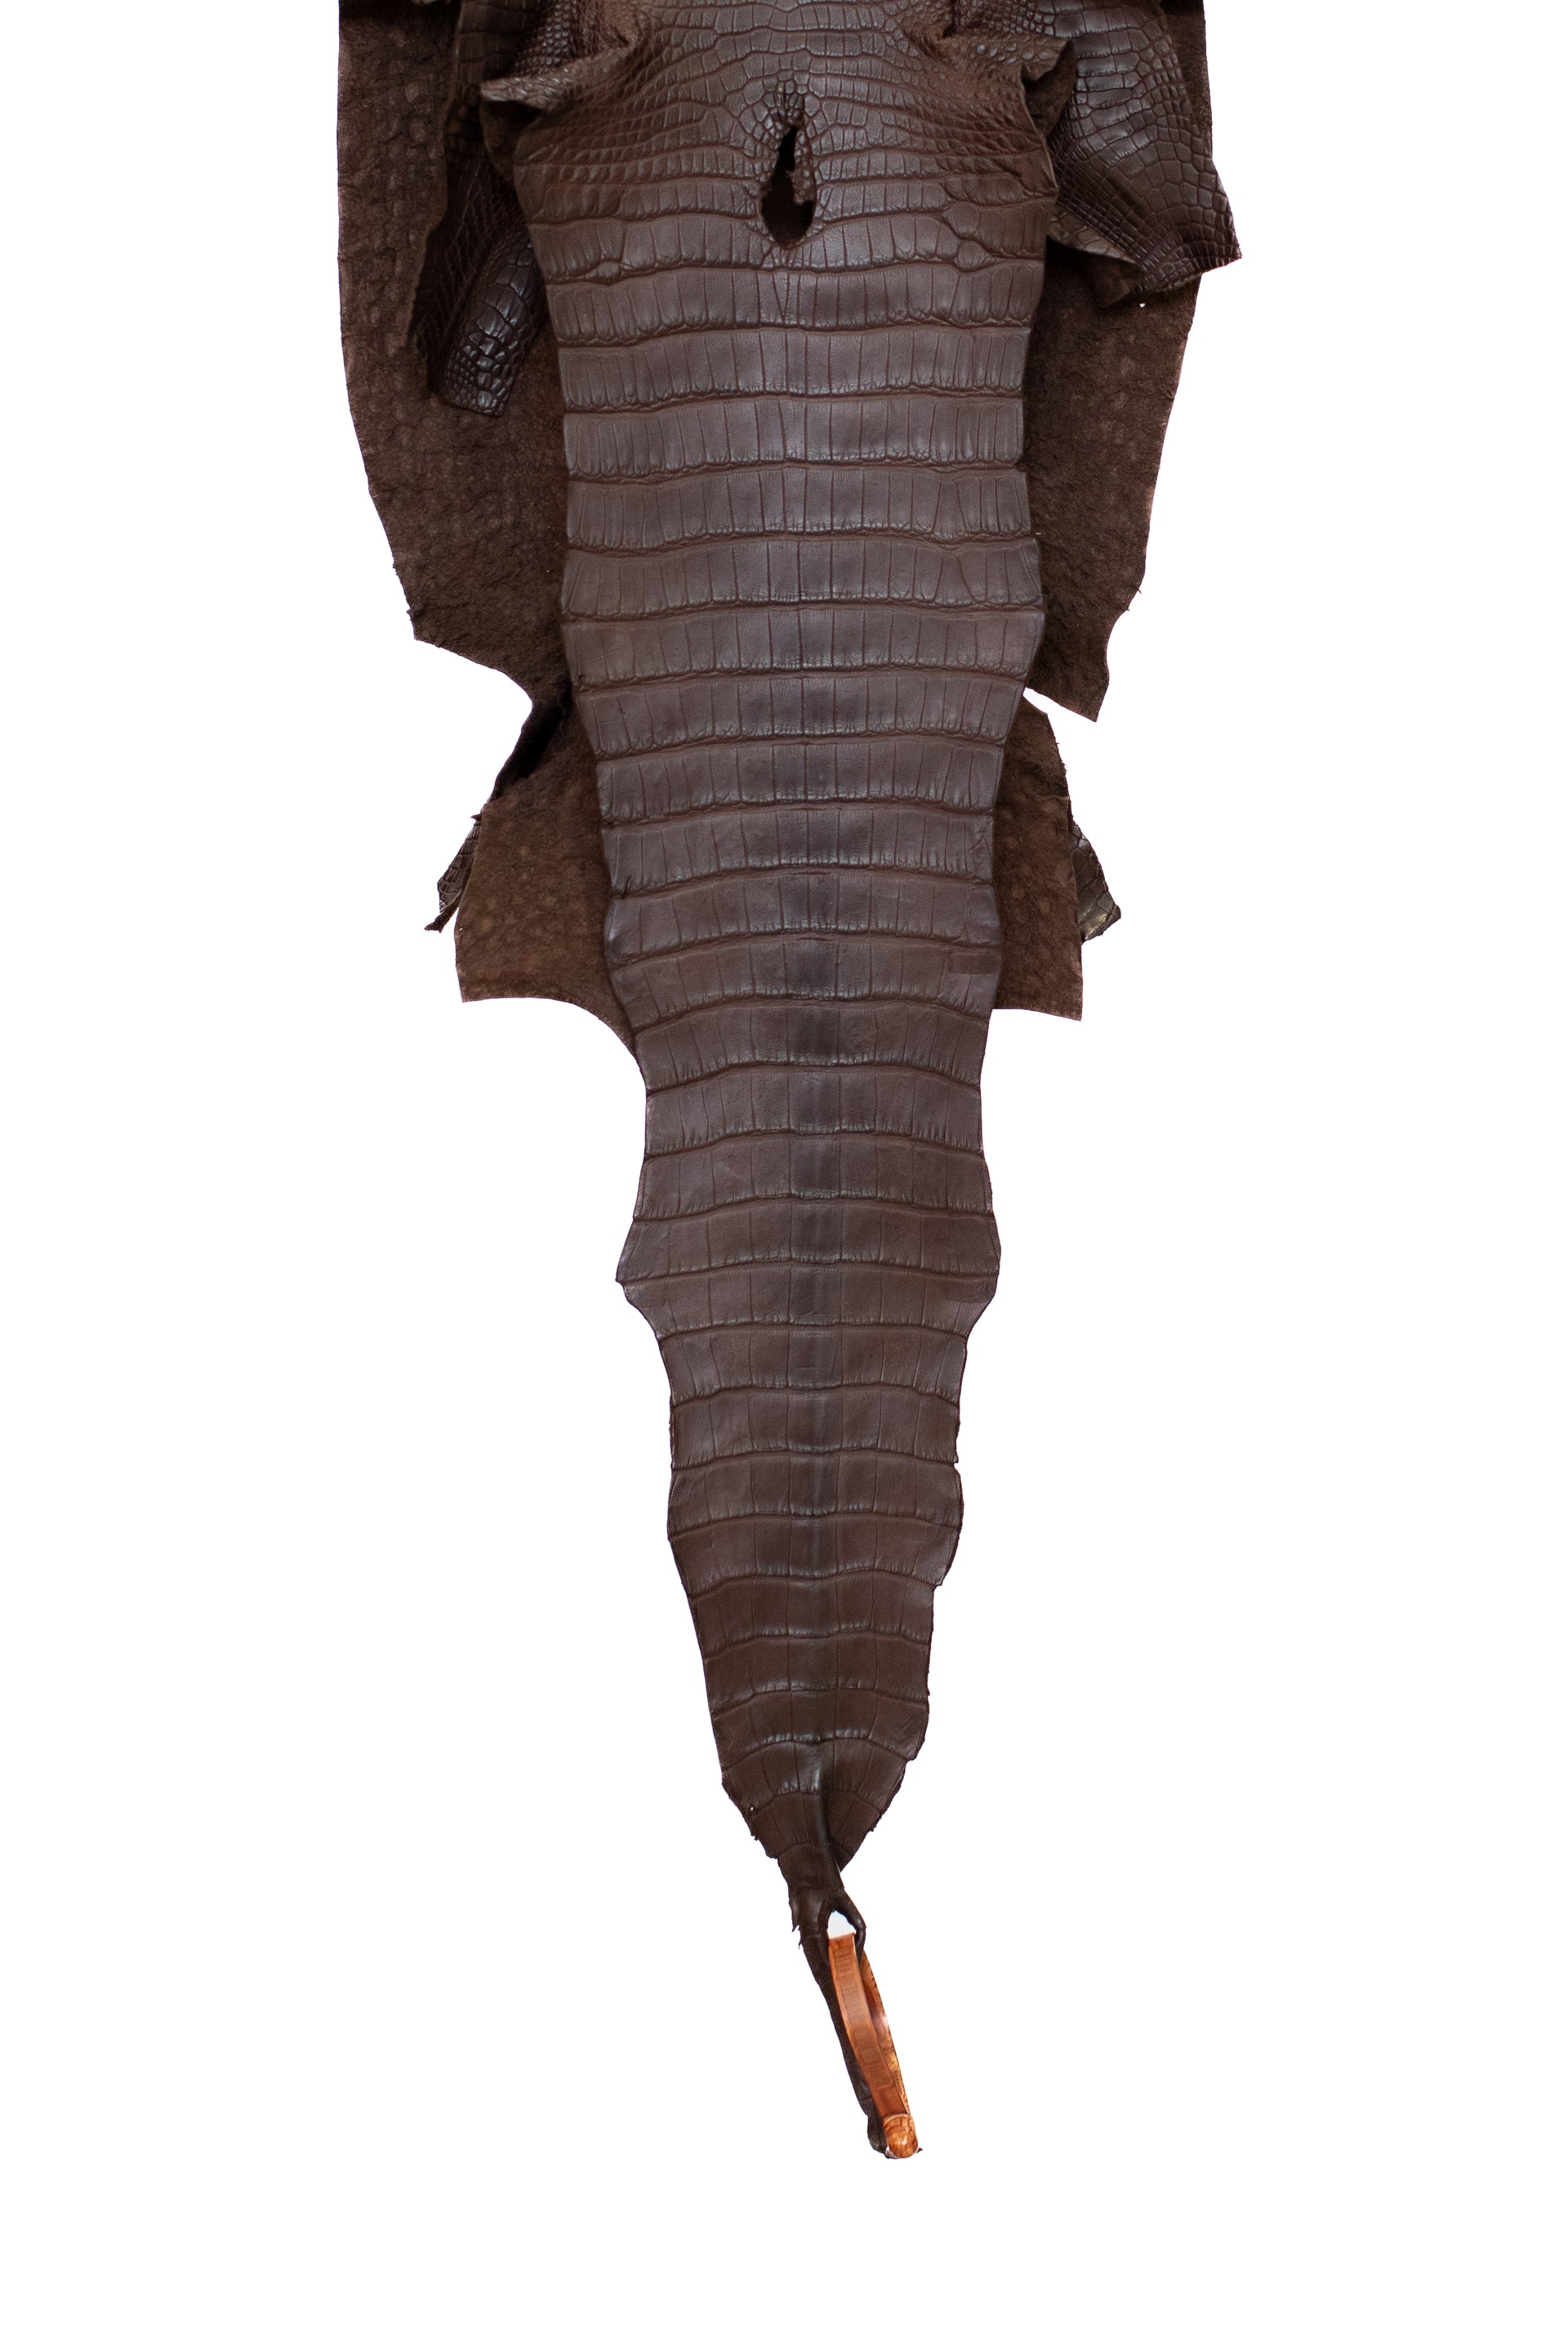 31 cm Grade 2/3 Chocolate Matte Wild American Alligator Leather - Tag: FL15-0032771